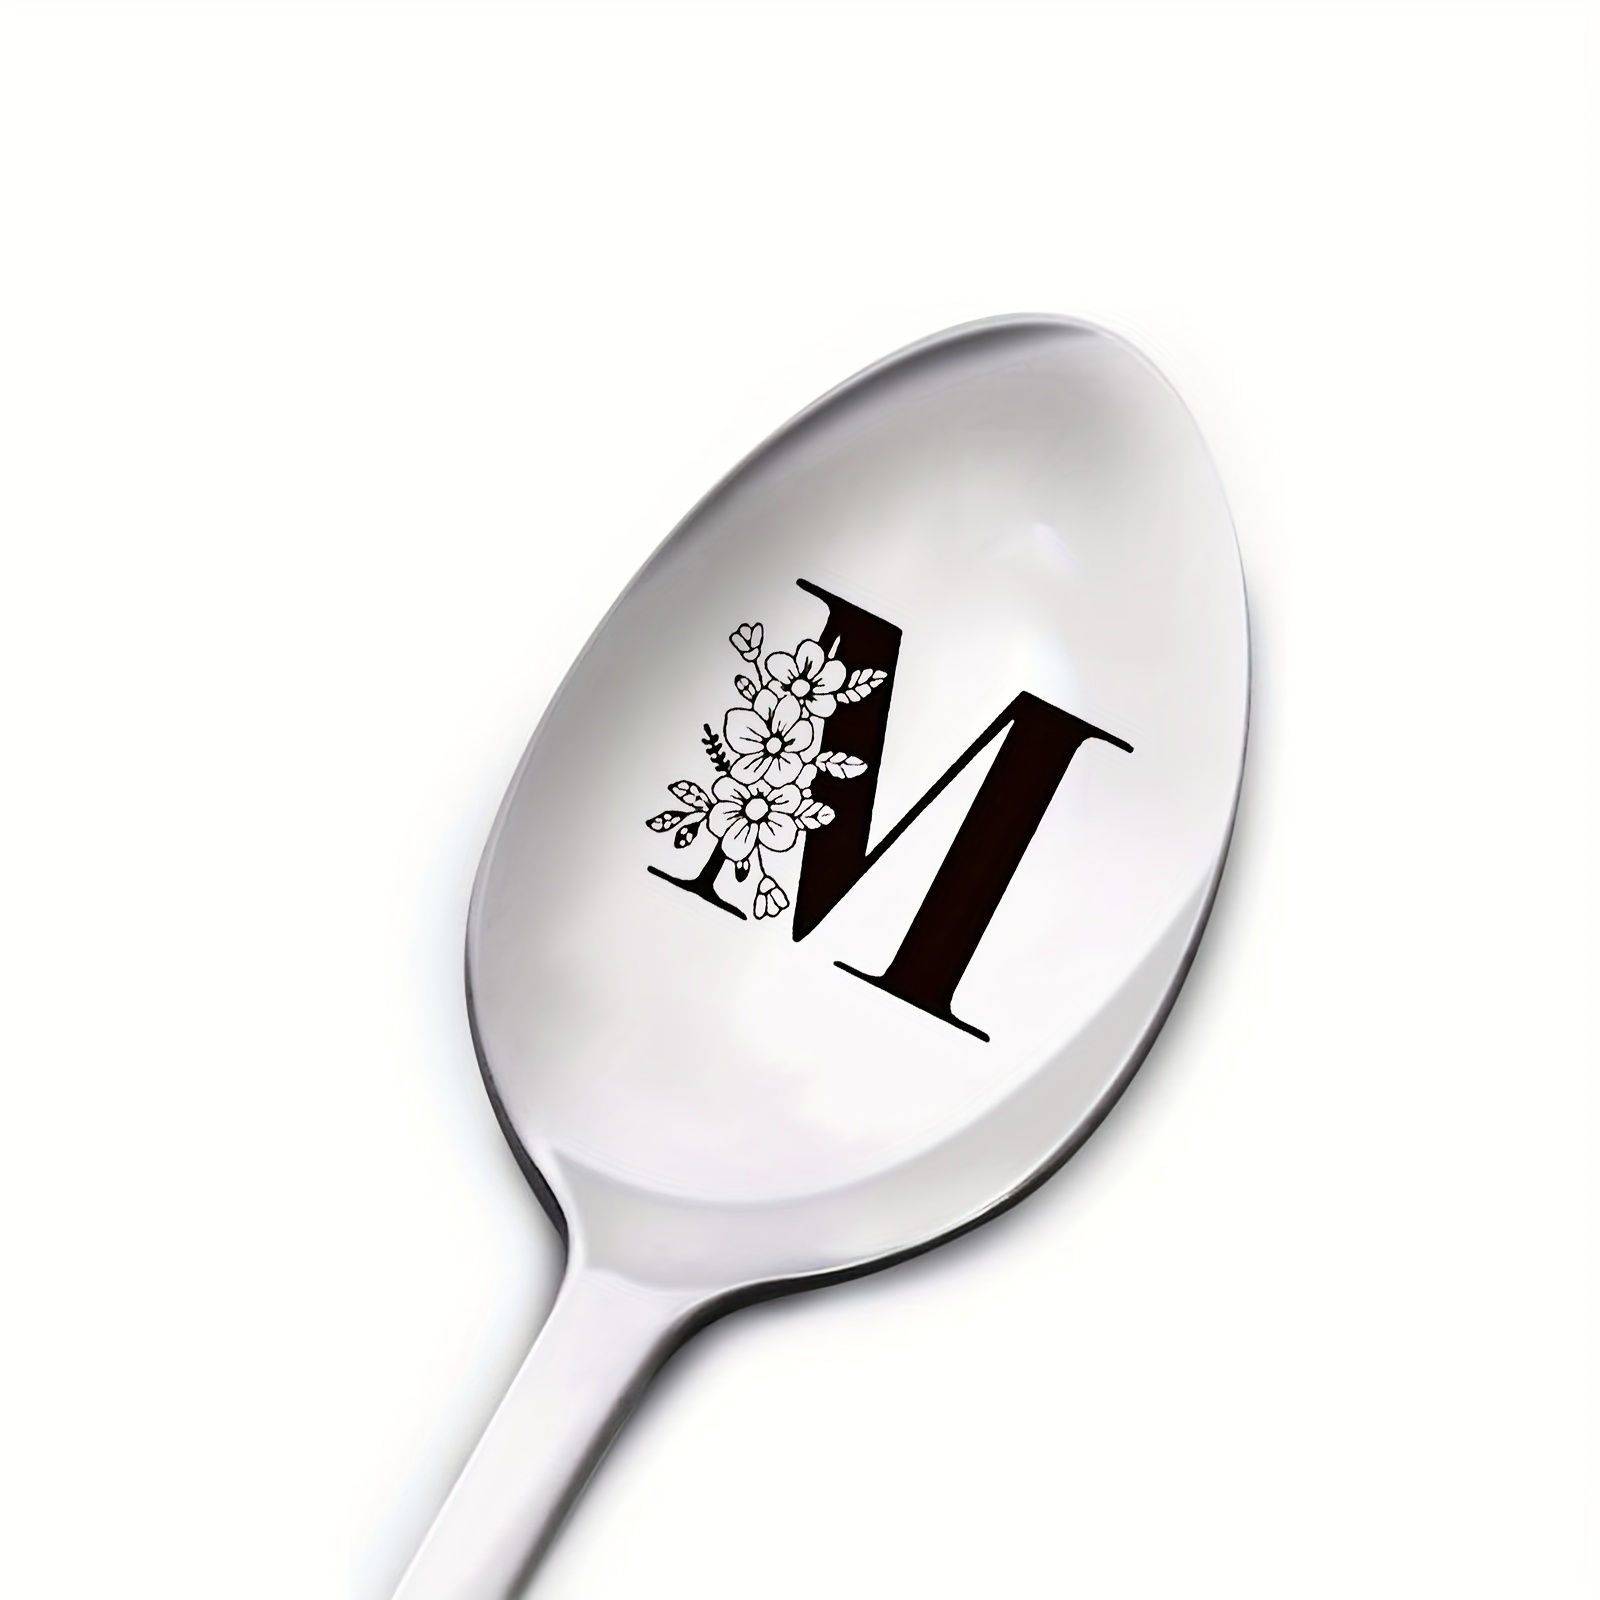  Initial Mug - Letter M Monogram - Cute Novelty